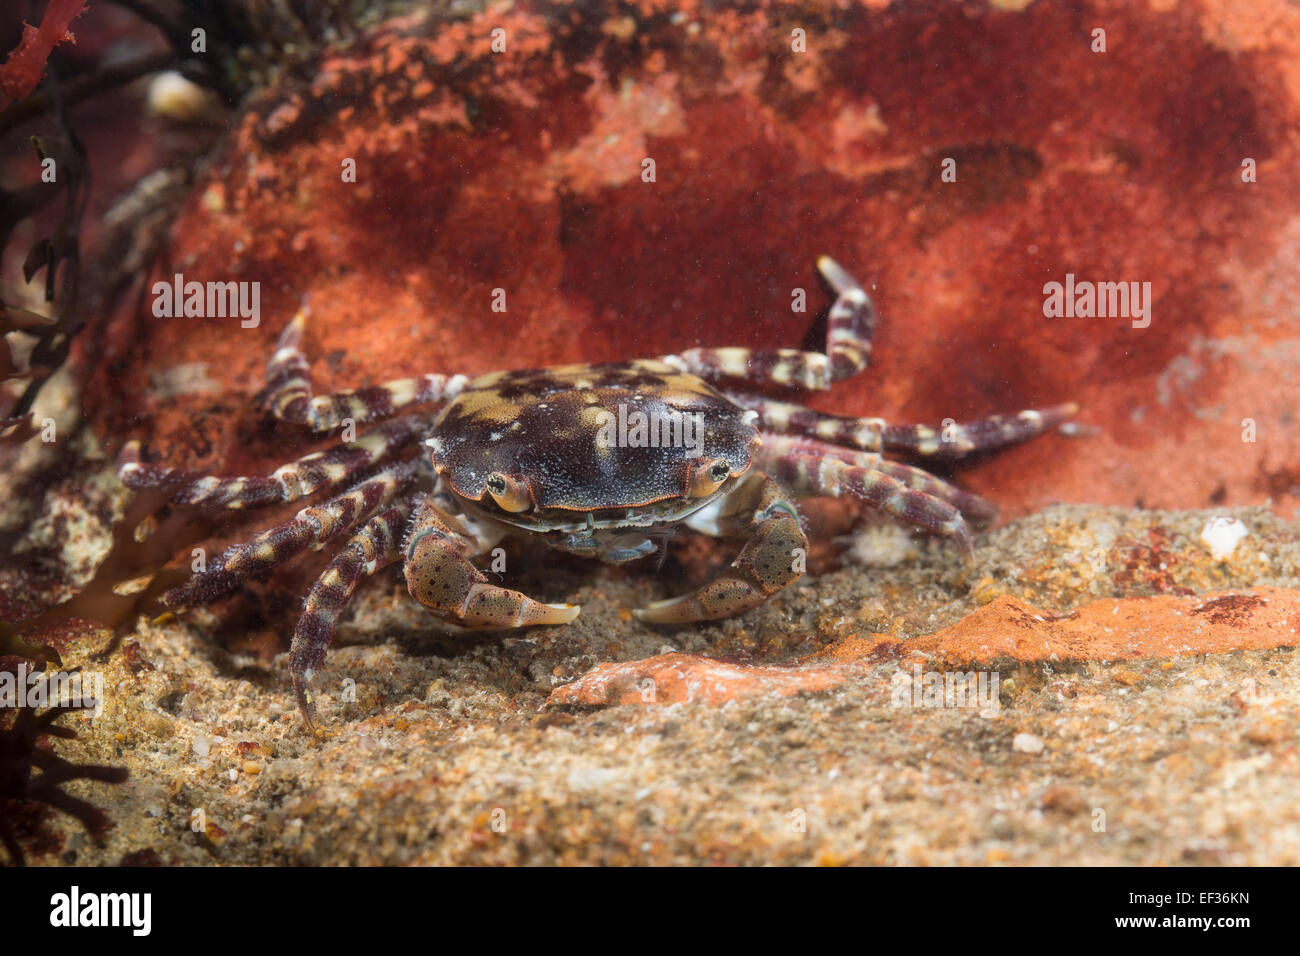 Japanese shore crab, Asian shore crab, Pacific crab, Japanische Felsenkrabbe, Asiatische Strandkrabbe, Hemigrapsus sanguineus Stock Photo